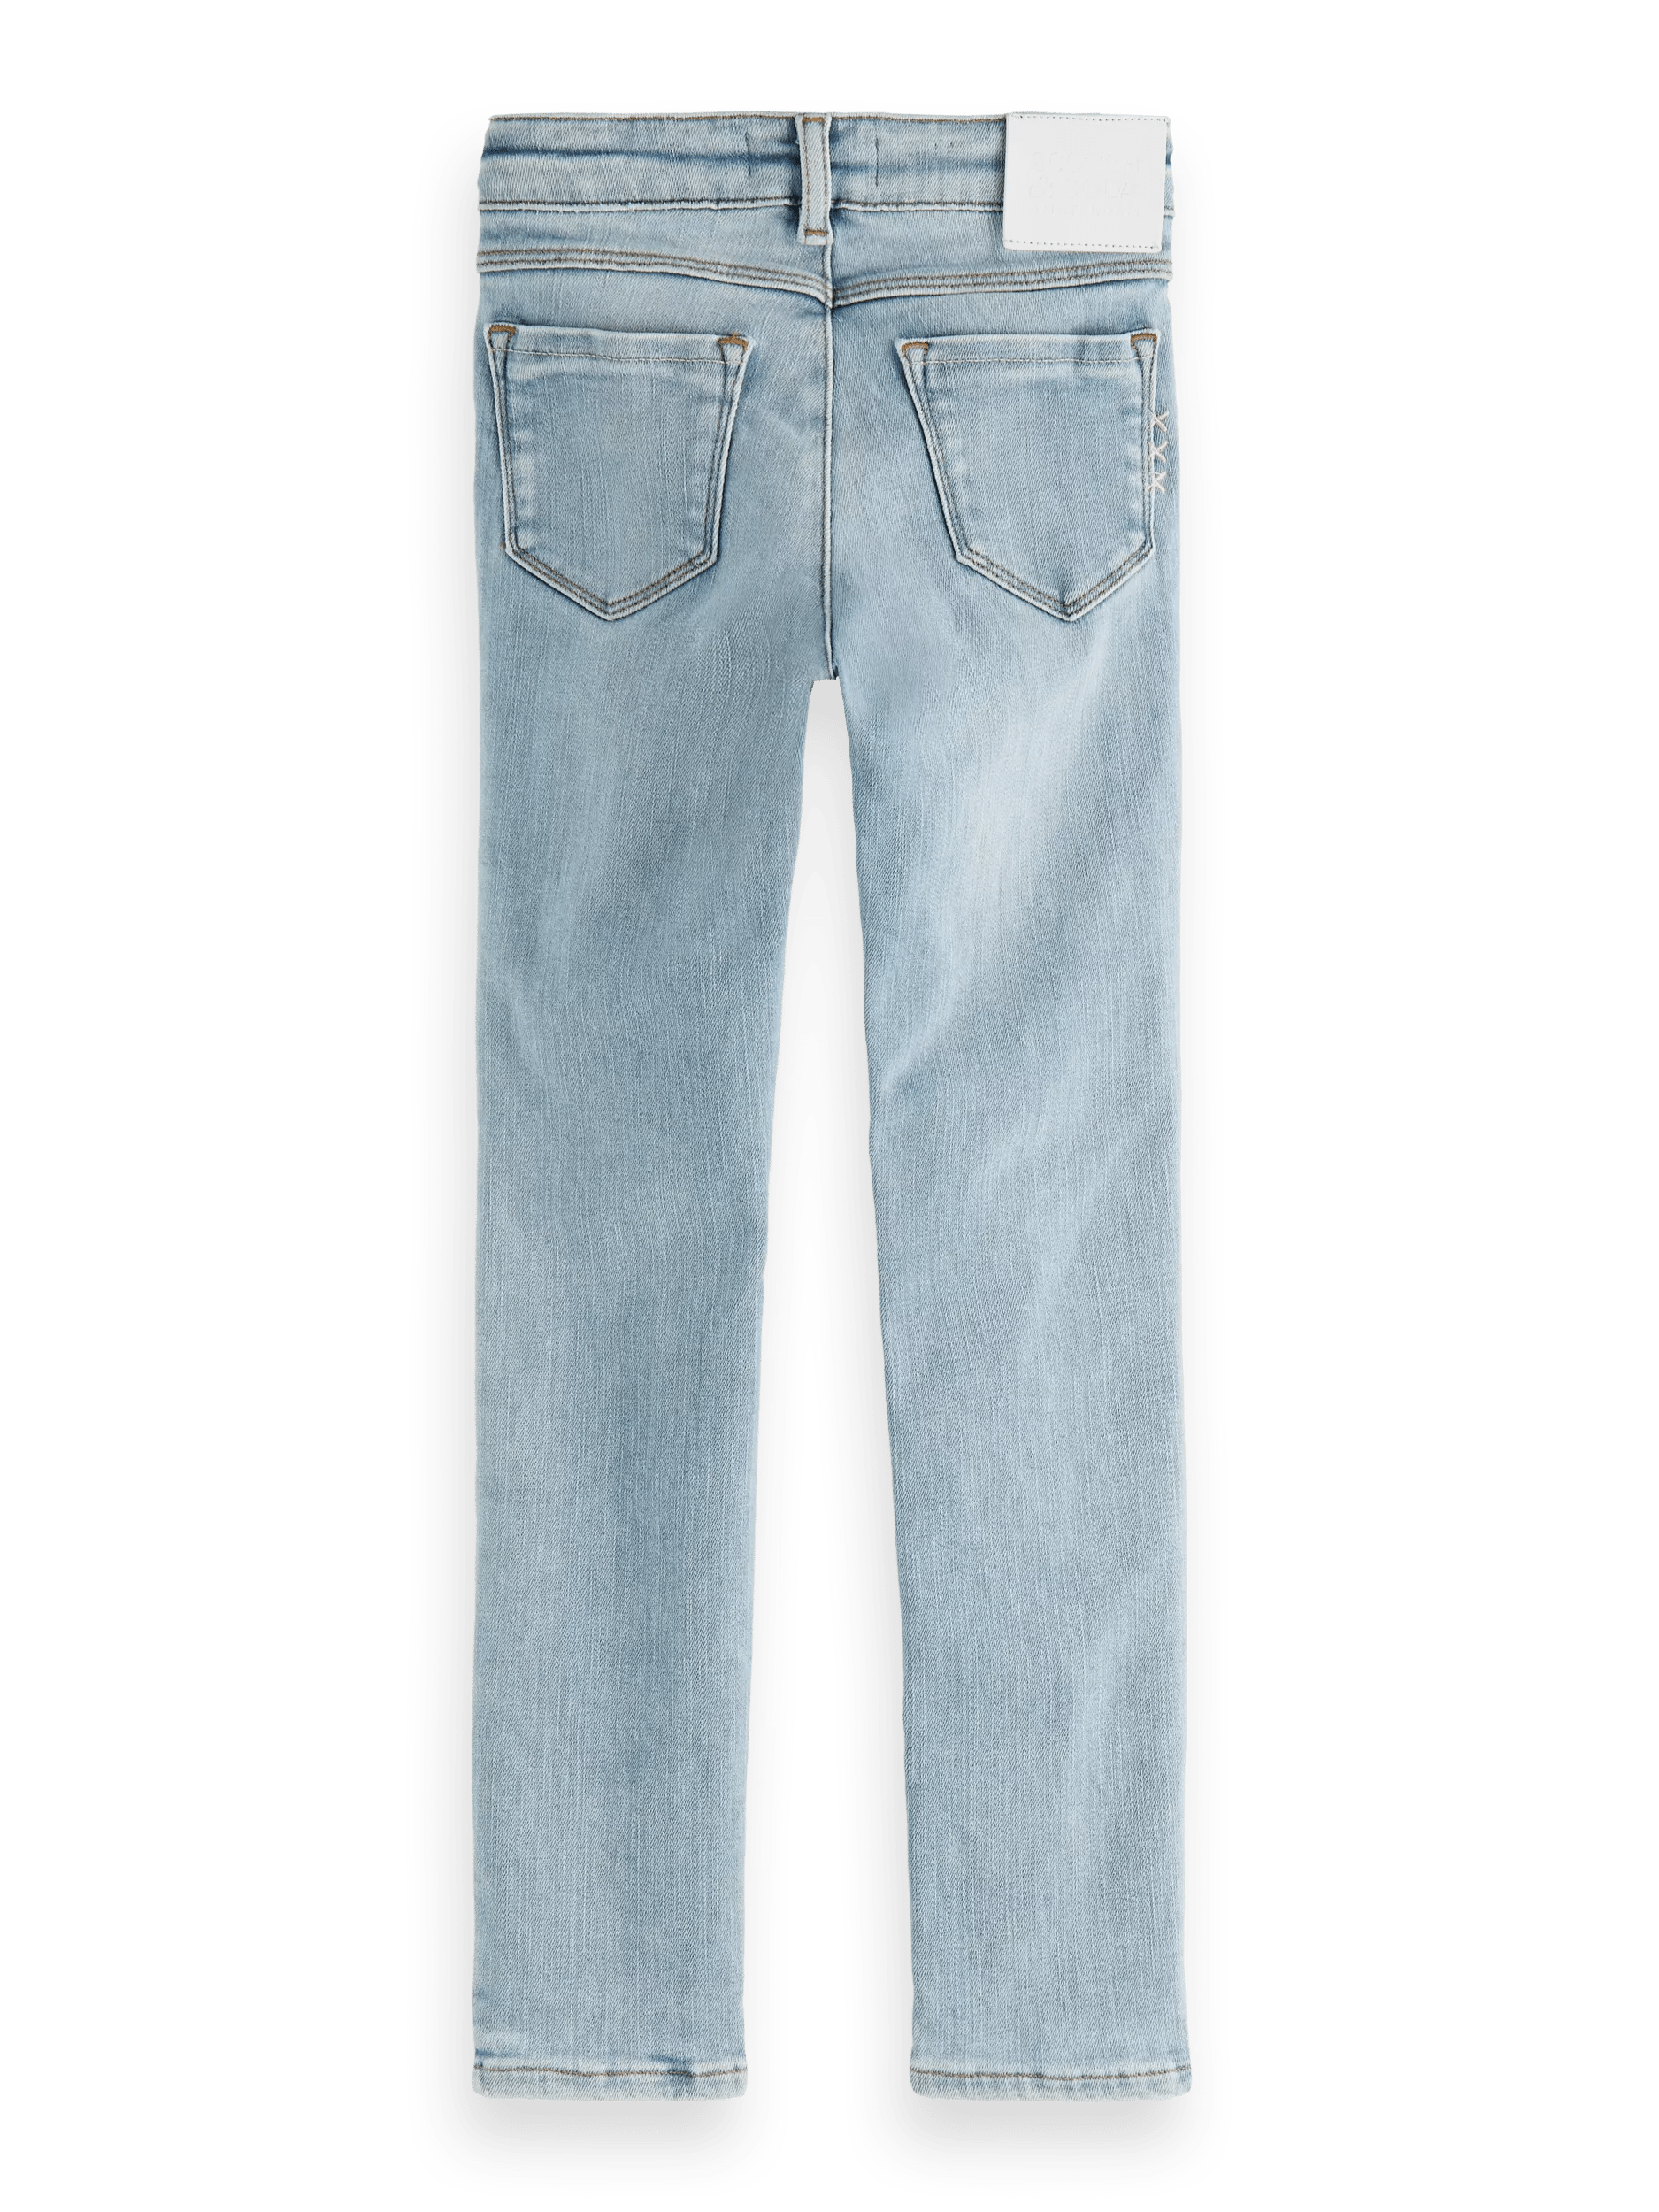 Scotch & Soda La Milou Skinny Jeans – Shore Blue BCK